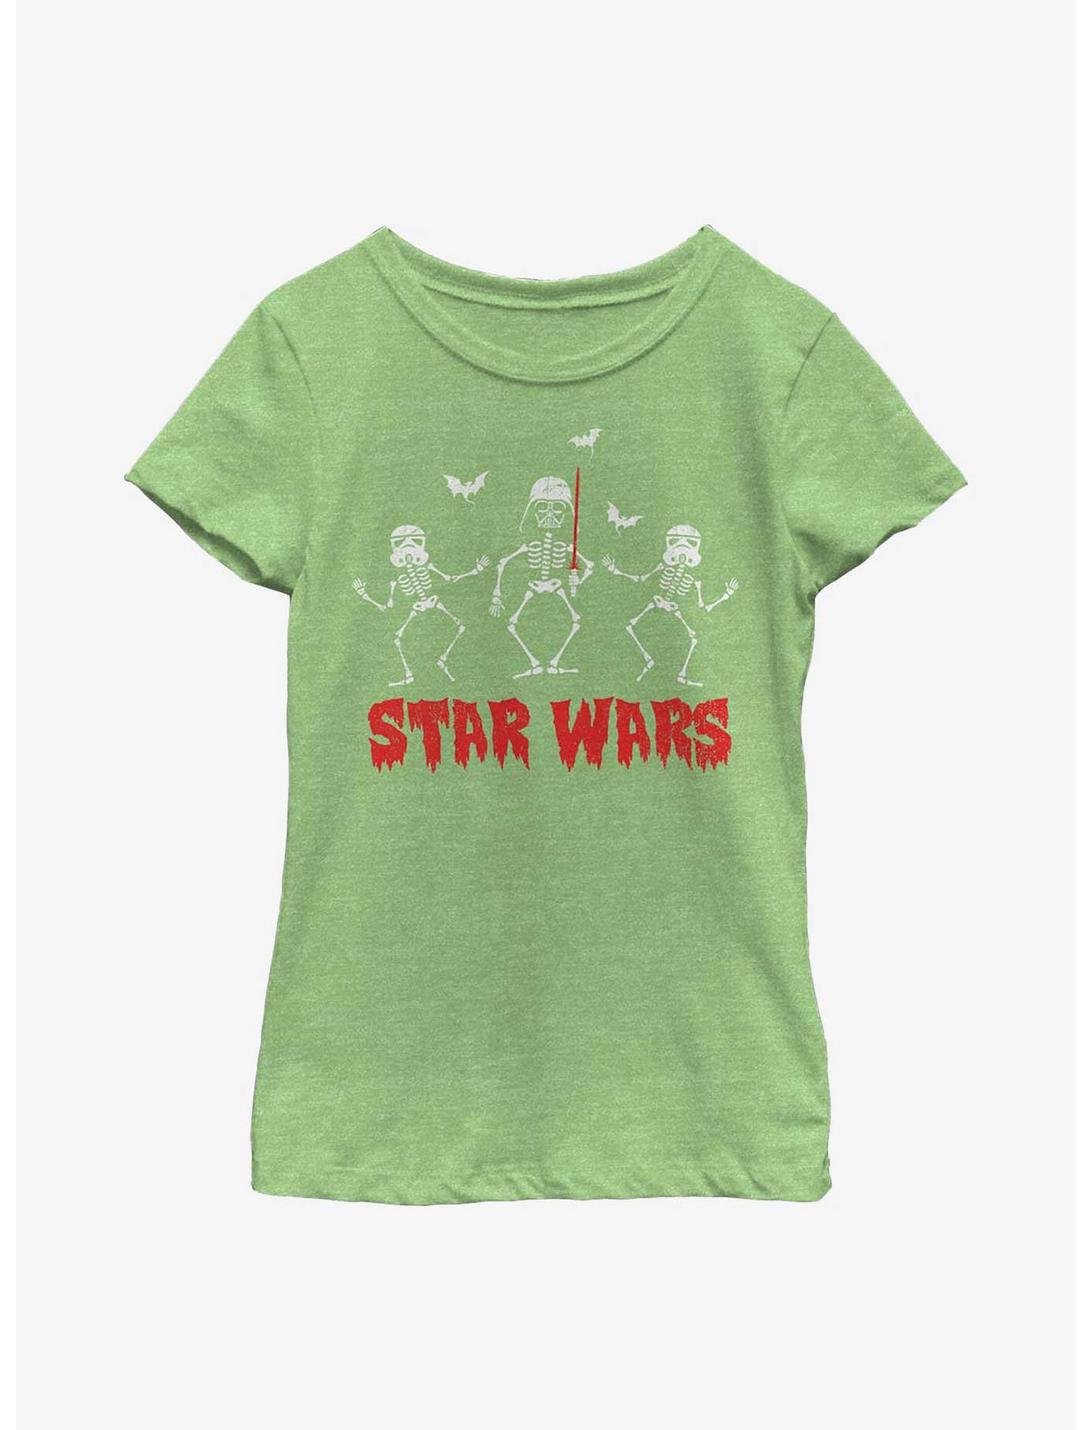 Star Wars Creep Wars Youth Girls T-Shirt, GRN APPLE, hi-res